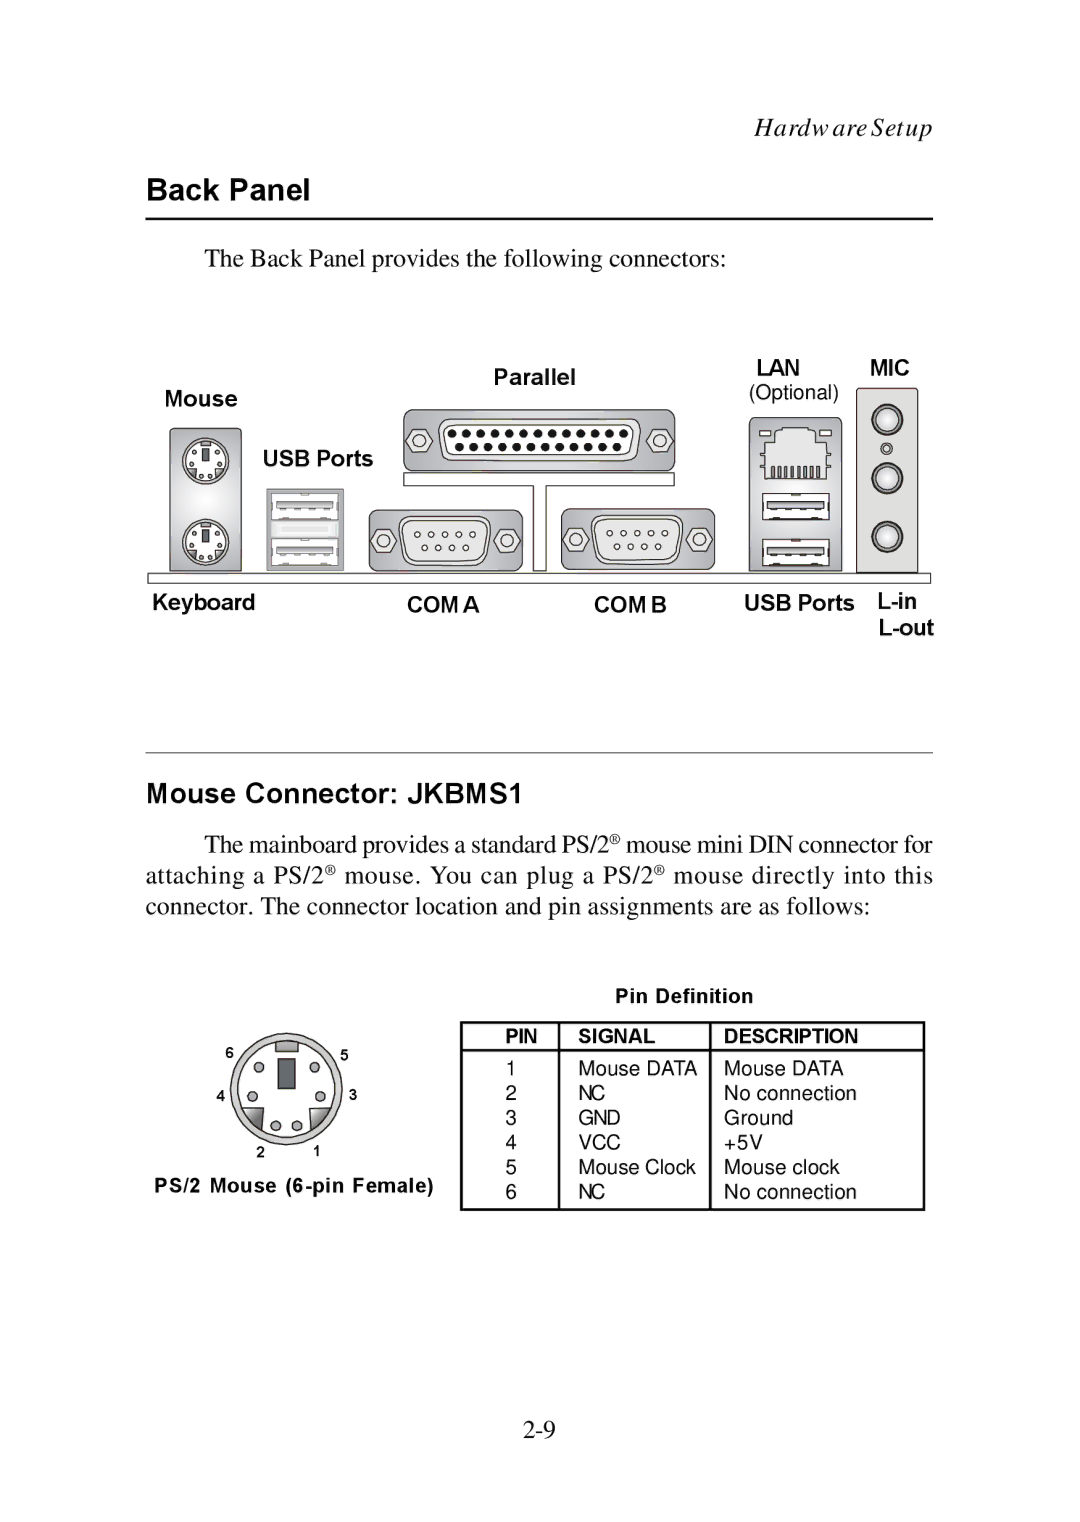 Premio Computer Premio Computer system manual Back Panel, Mouse Connector JKBMS1 